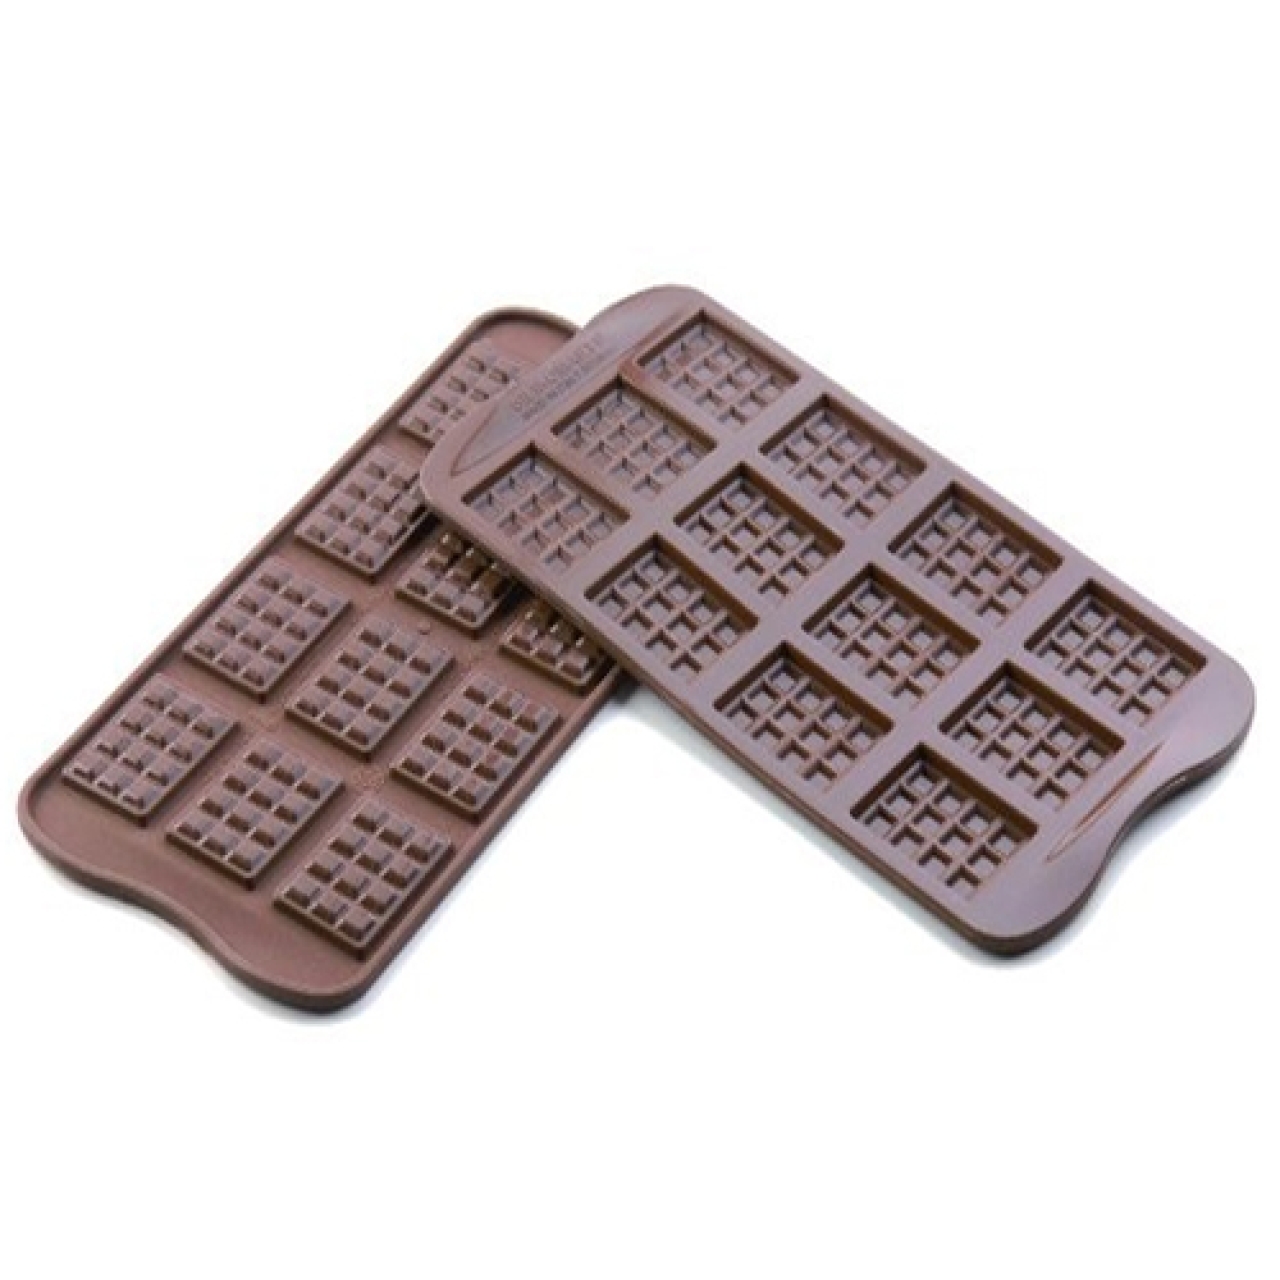 Silikomart Silikonform für Schokolade "Chocolate Bars"